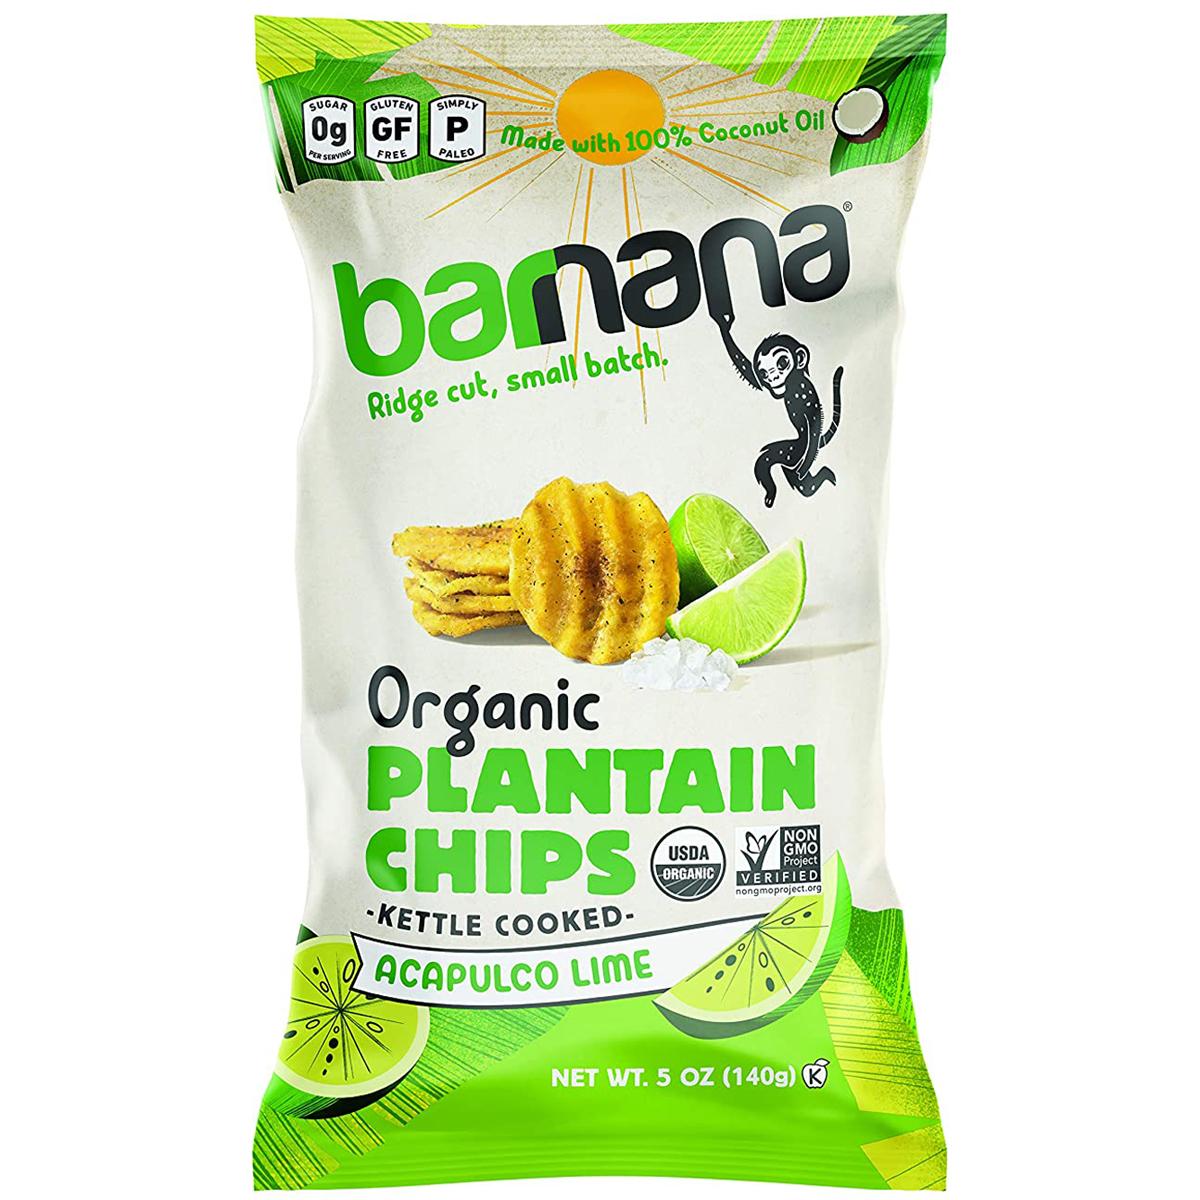 Barnana Organic Plantain Chips for $2.48 Shipped